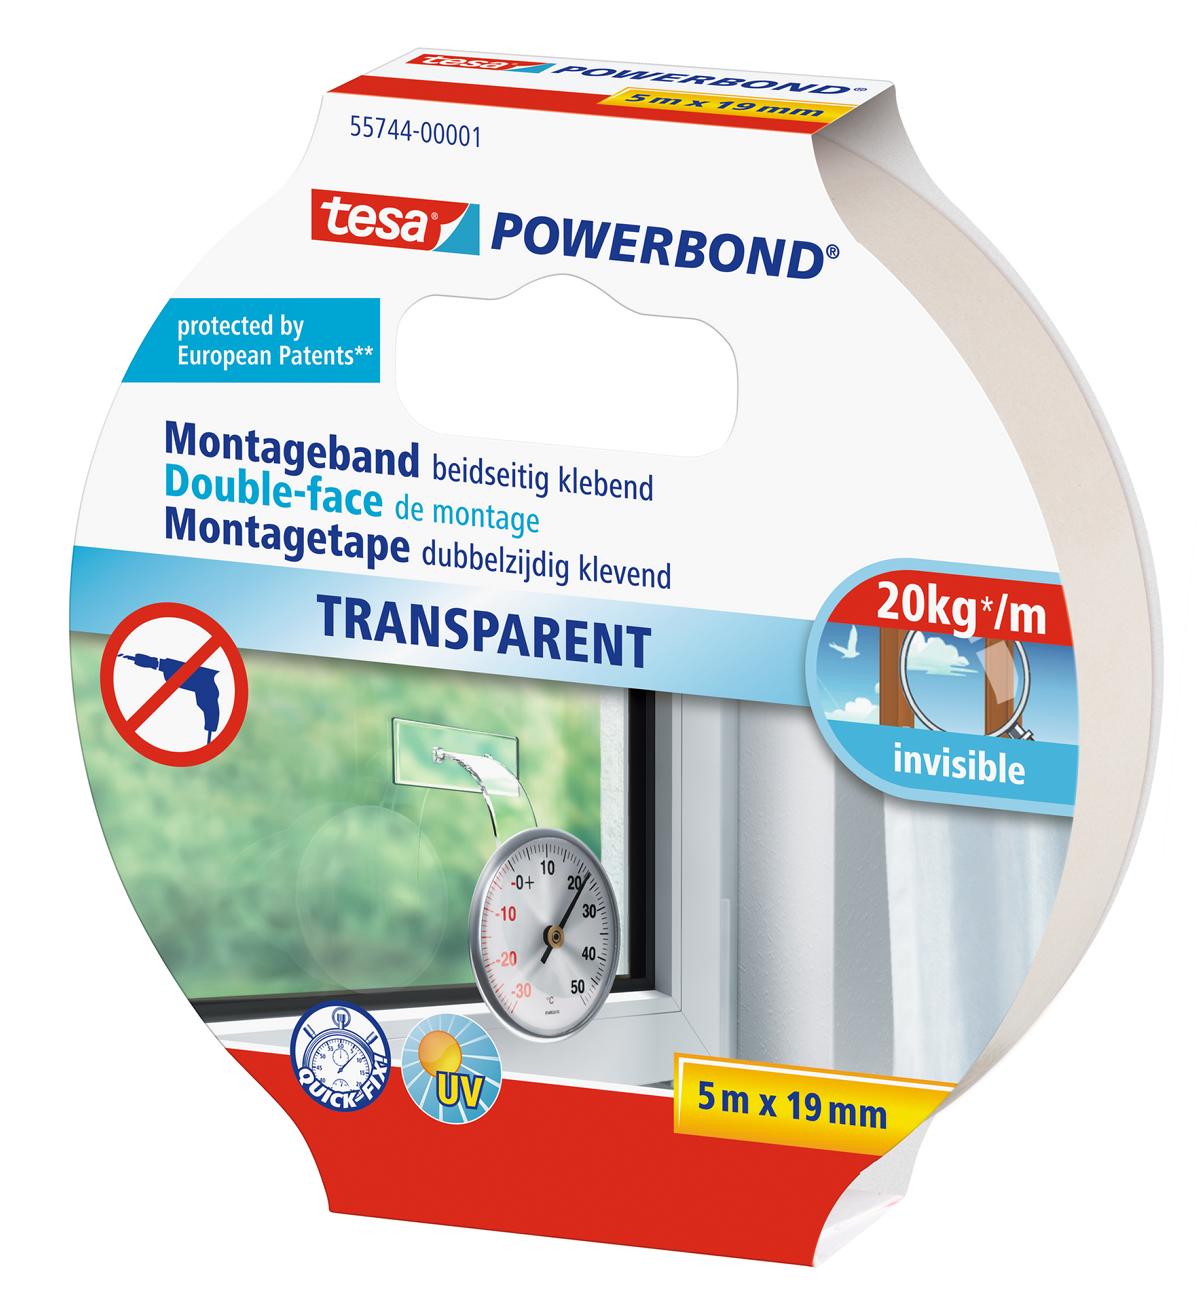 tesa Powerbond Montageband Transparent, 5 m